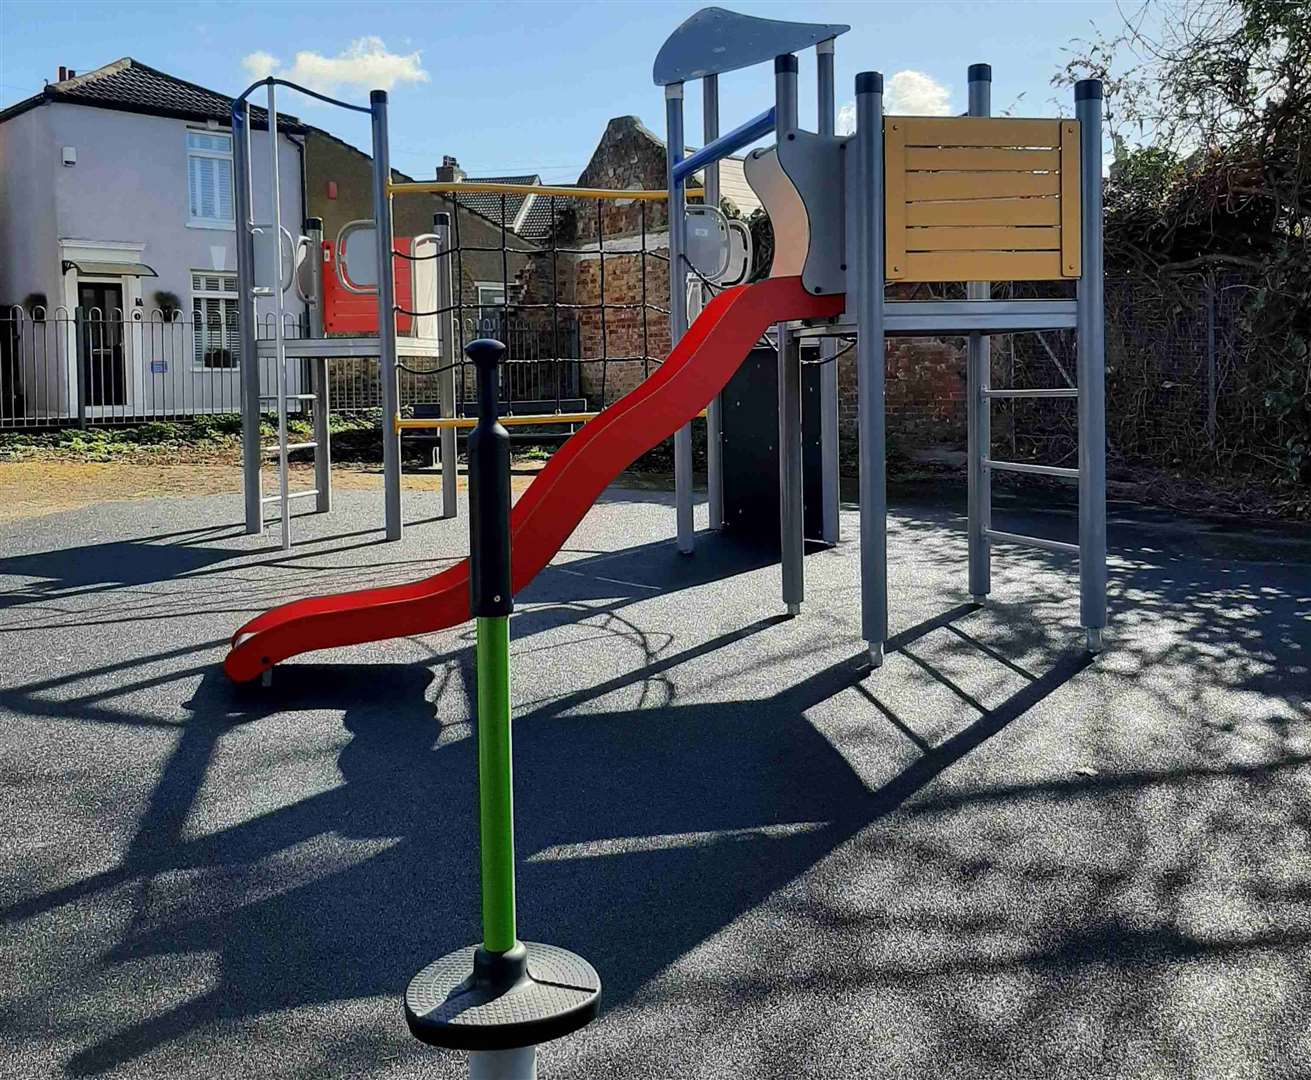 The playground in Arundel Street, Maidstone, has undergone a refurbishment